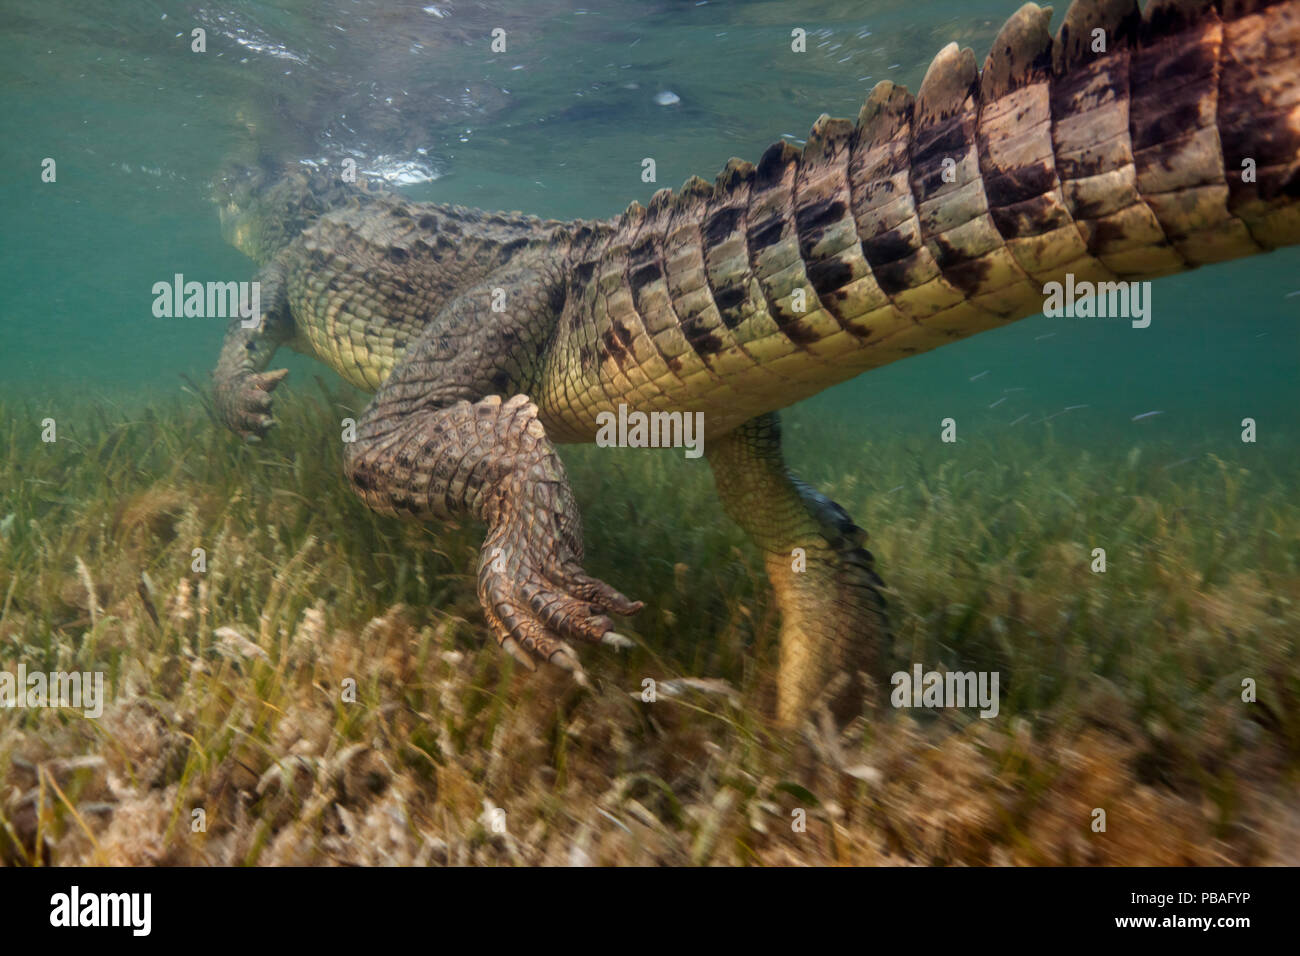 American crocodile (Crocodylus acutus) rear view of animal swimming away over seagrass bed, Banco Chinchorro Biosphere Reserve, Caribbean region, Mexico Stock Photo